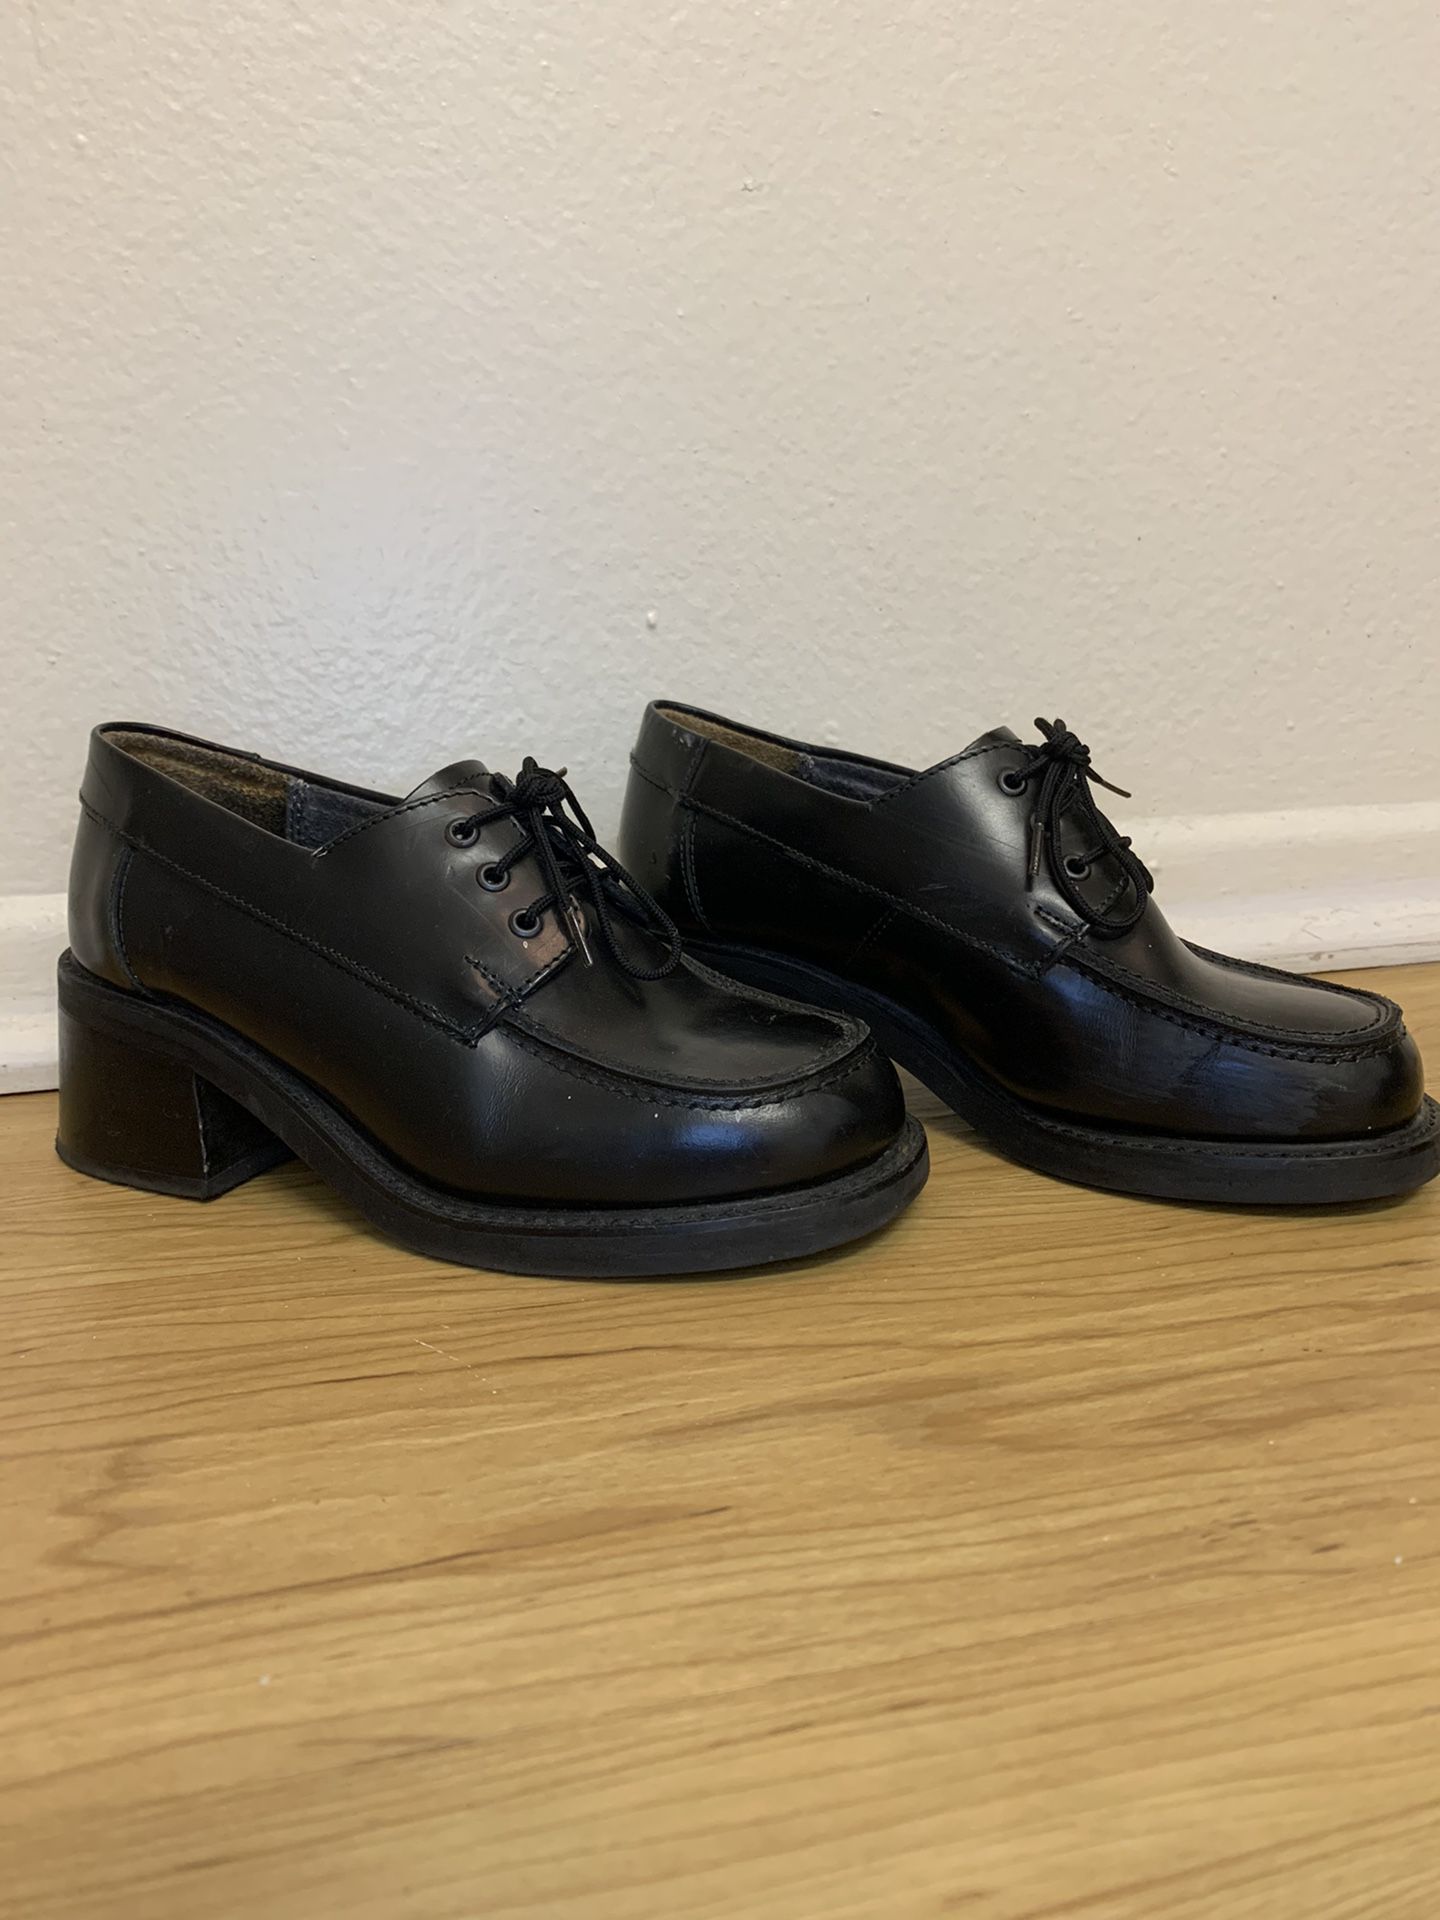 Black shoes. $8 per pair